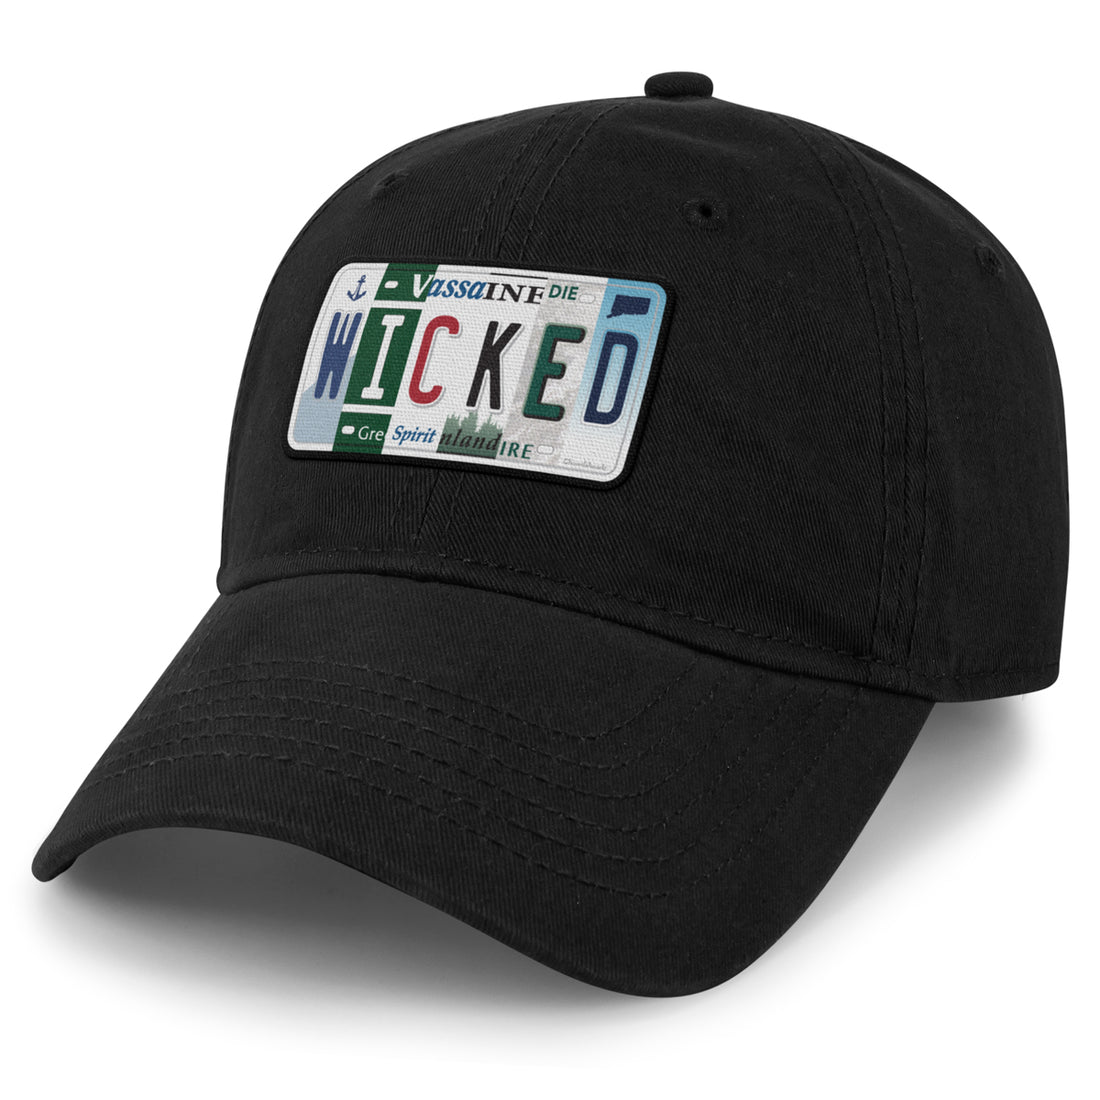 Wicked License Plate Dad Hat - Chowdaheadz